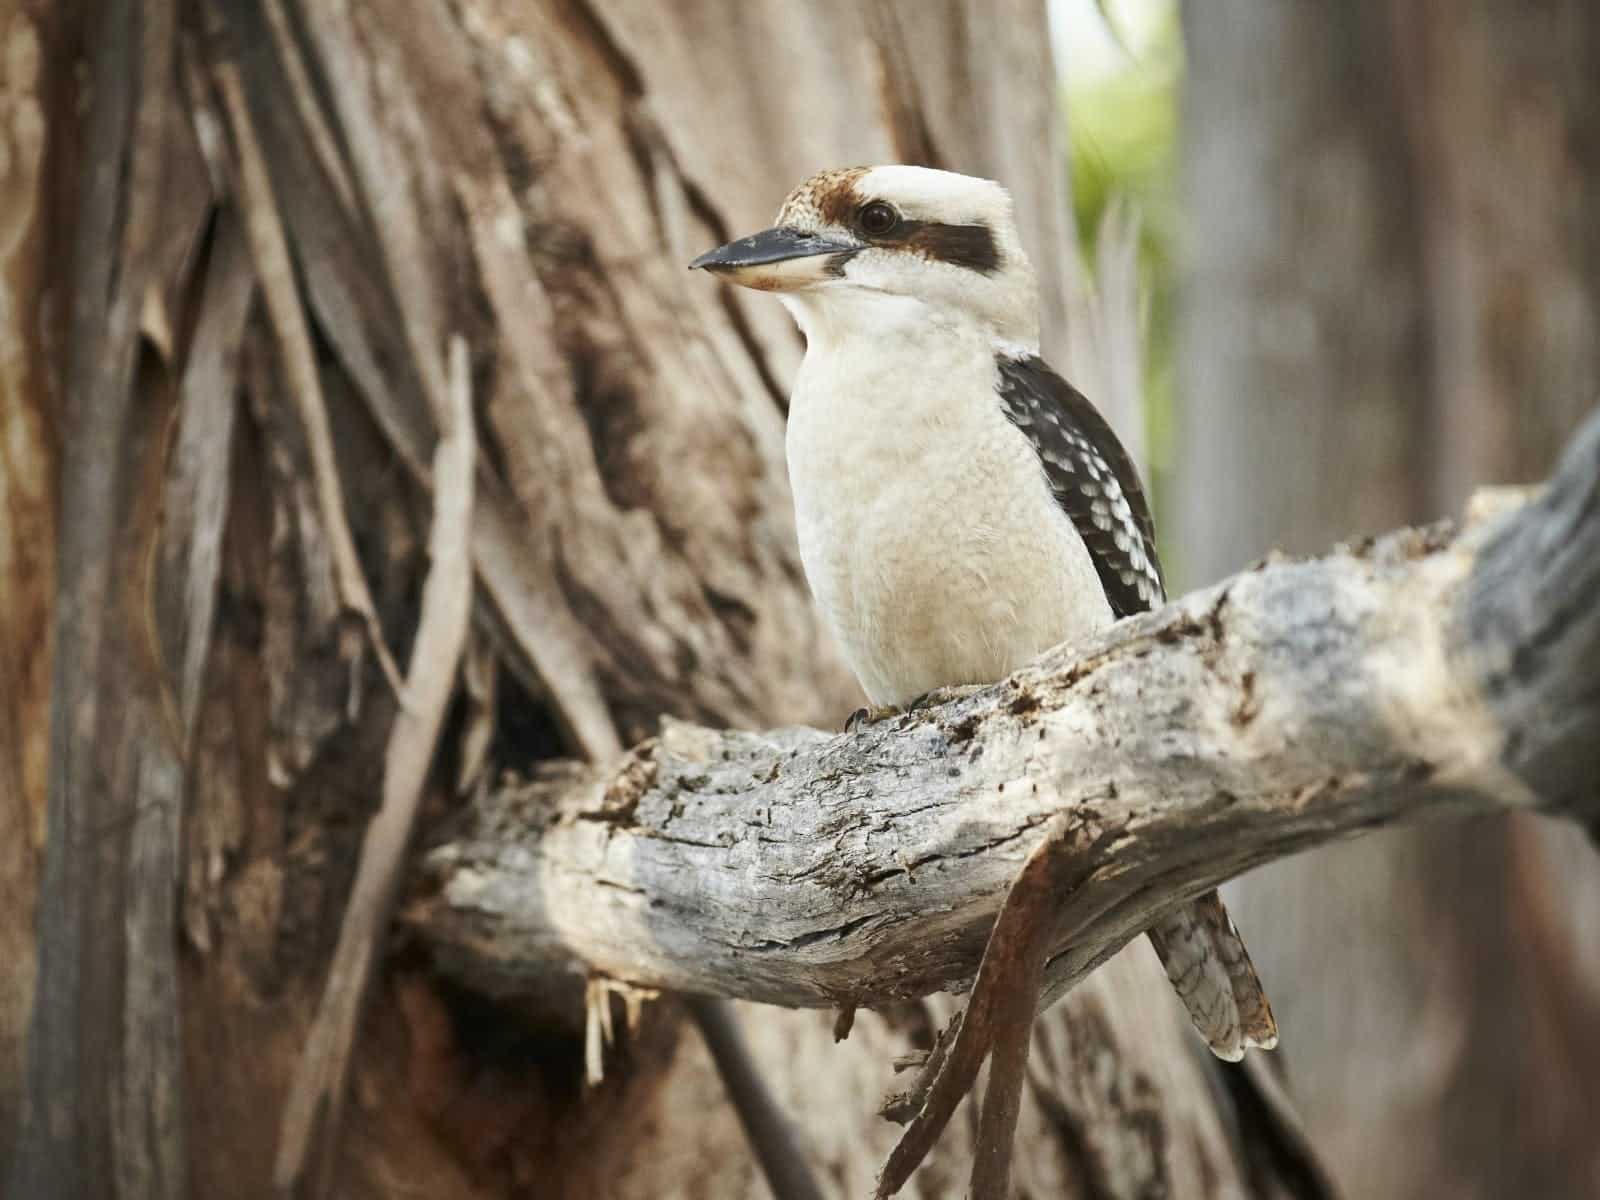 Kookaburra sitting on a tree branch.